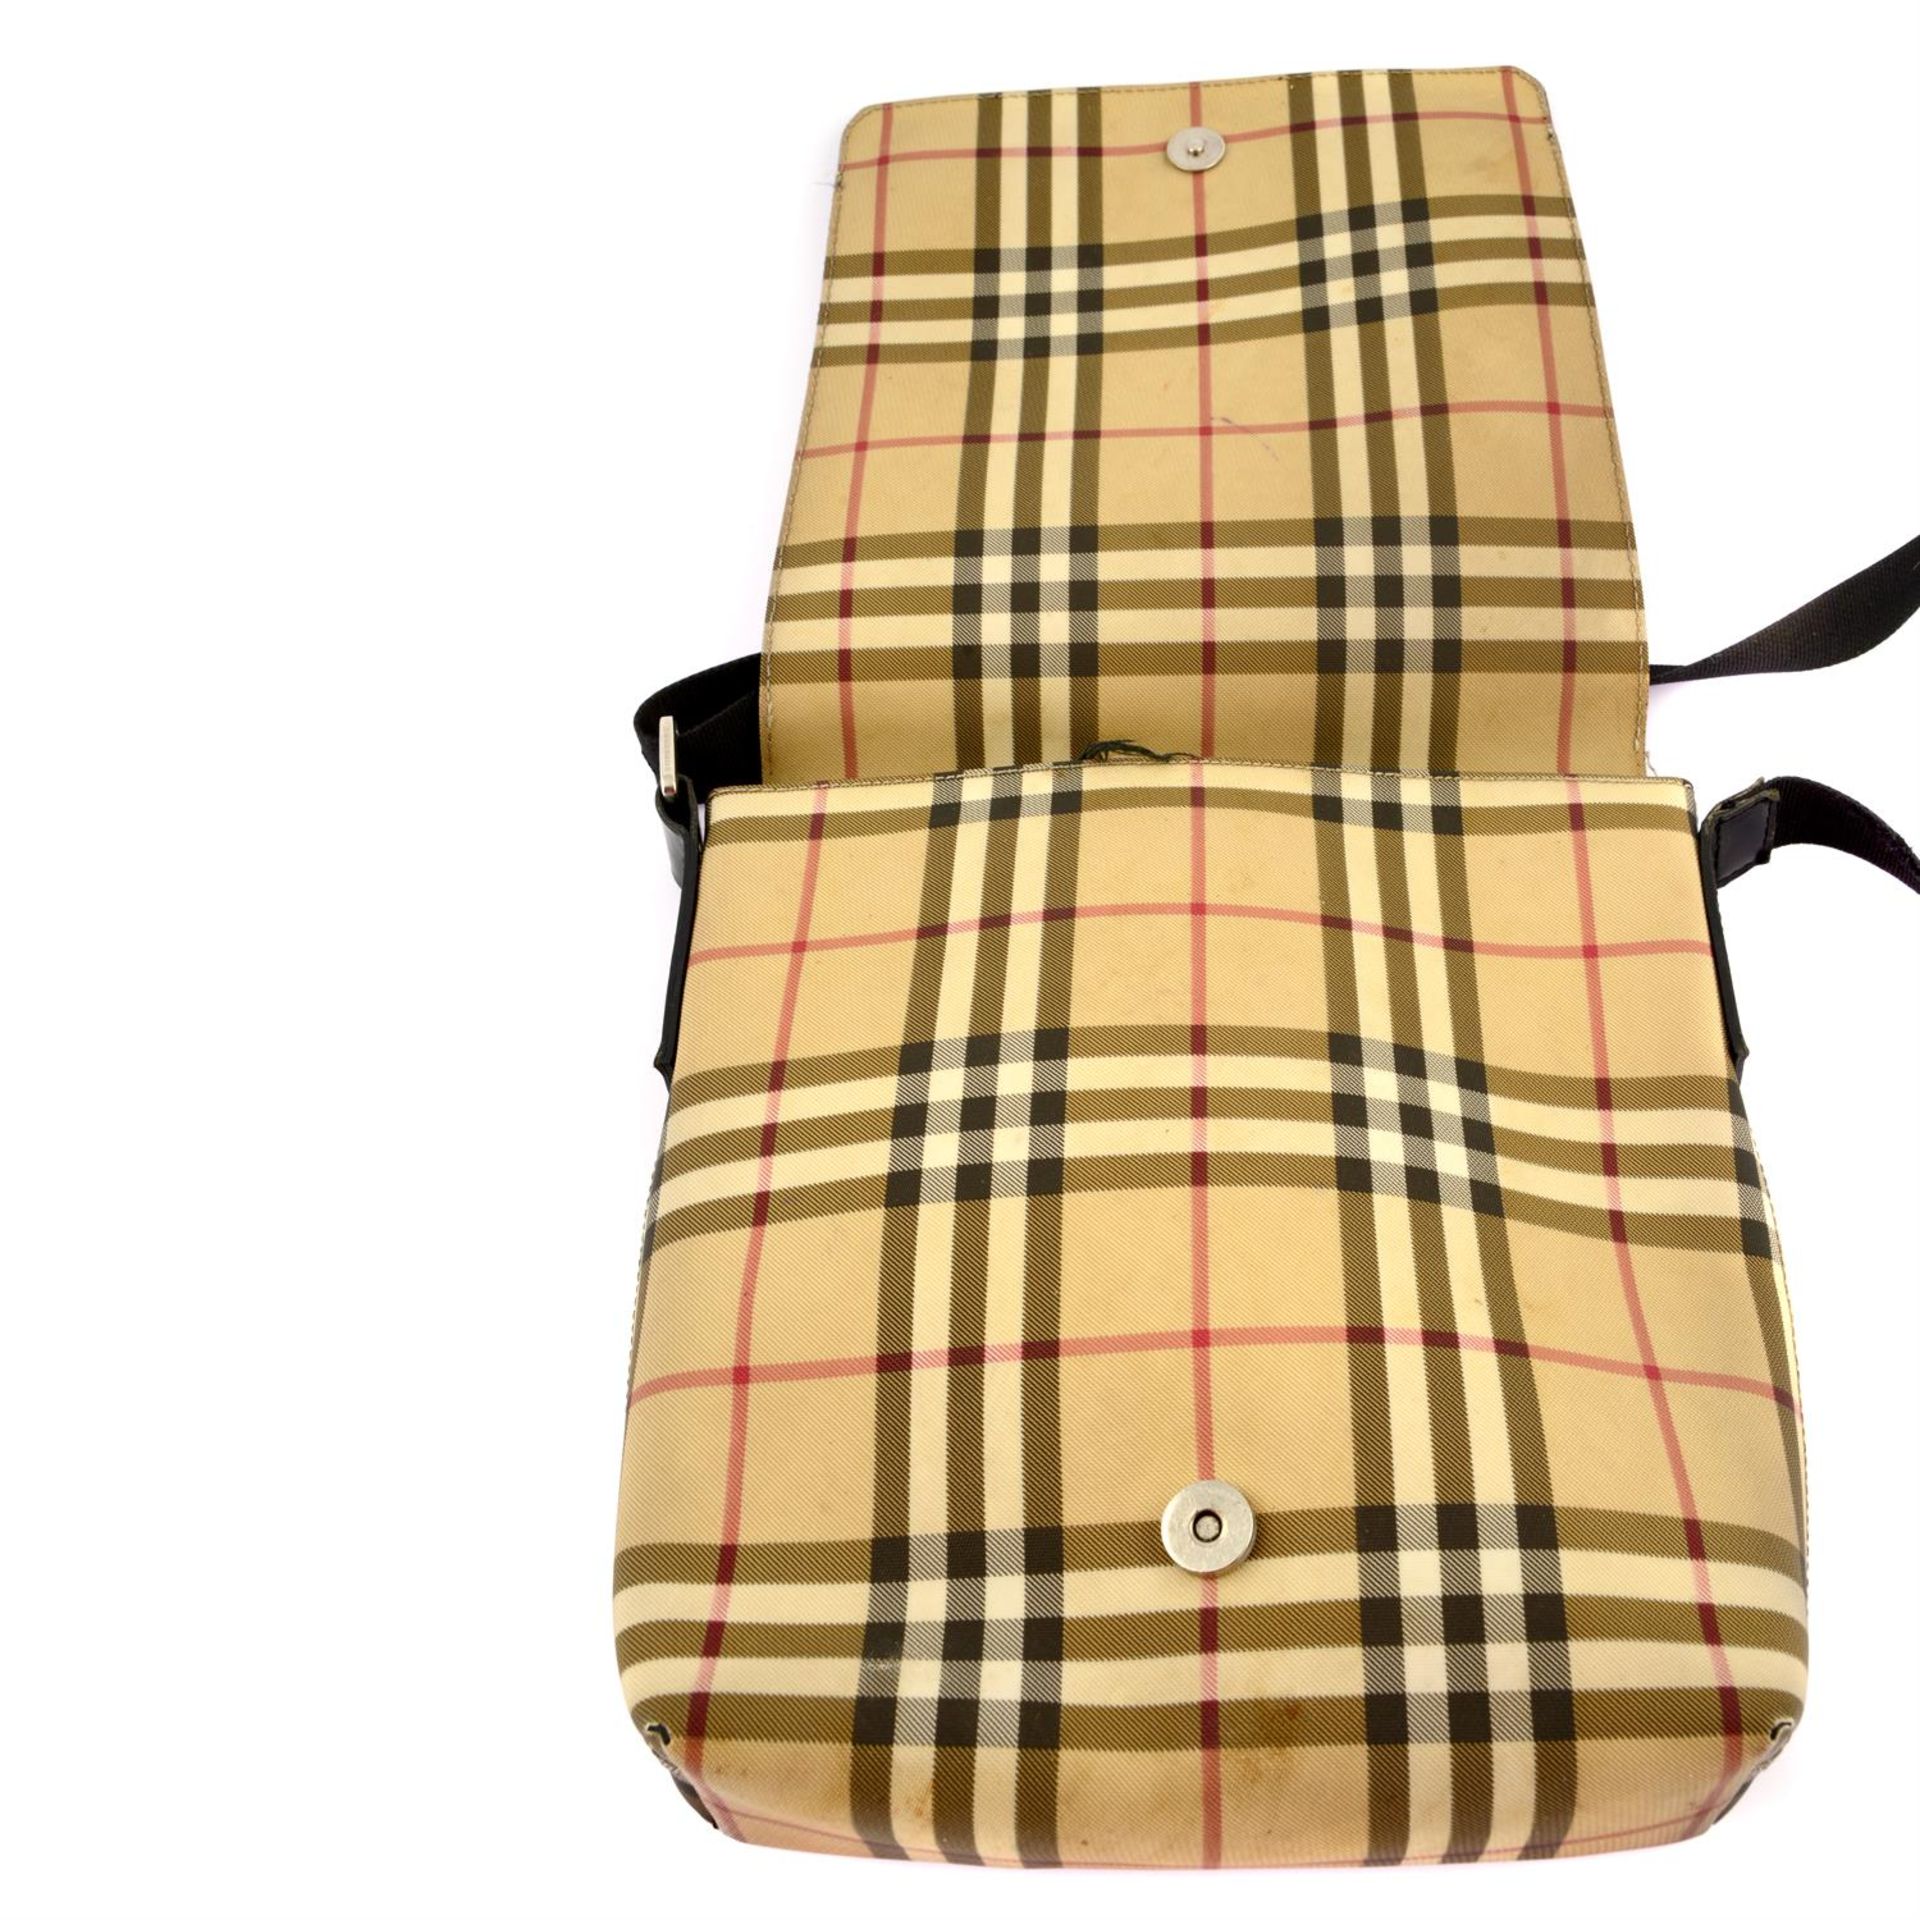 BURBERRY - a canvas house check shoulder bag. - Image 5 of 5